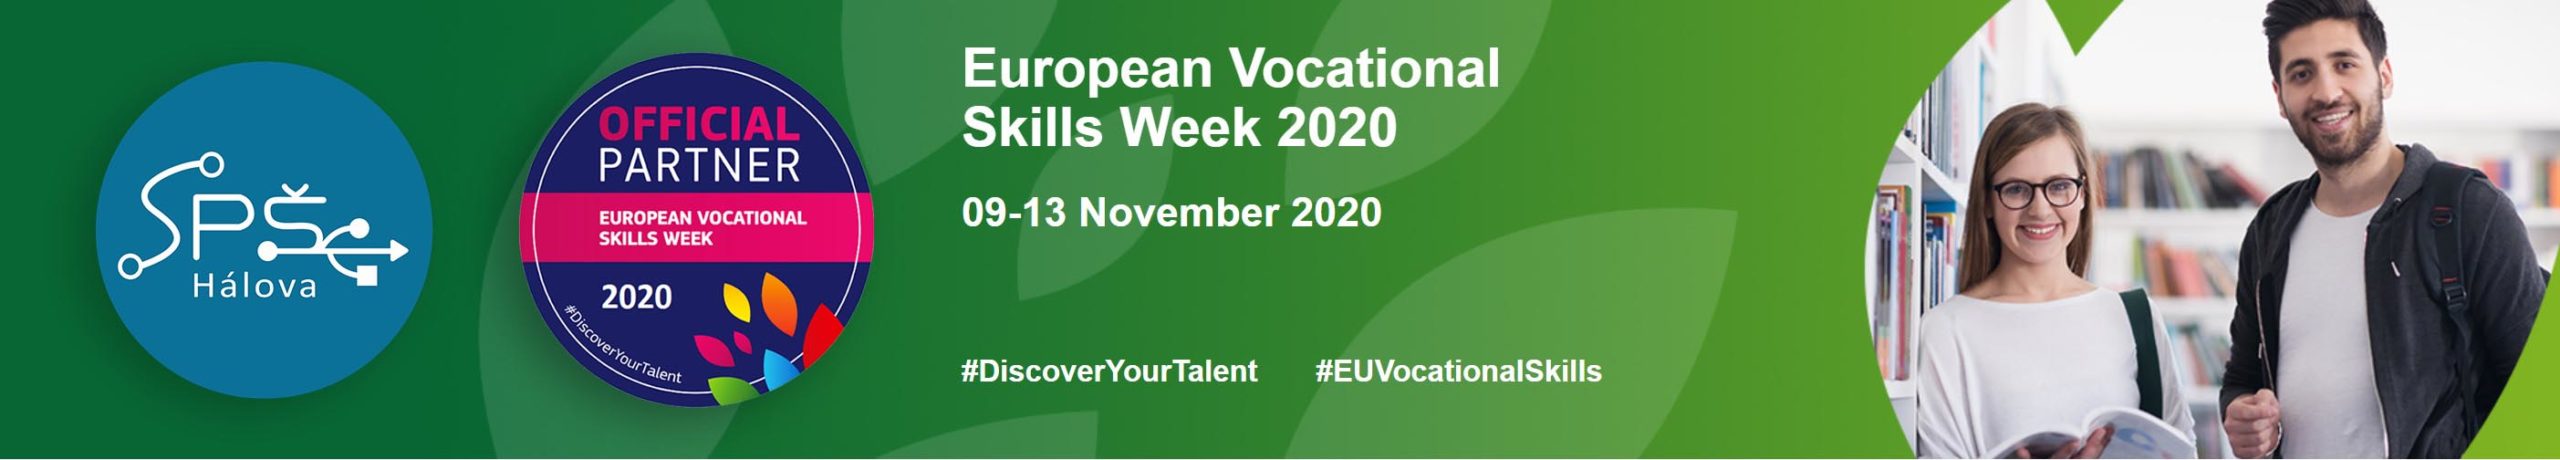 European Vocational Skills Week 2020! banner